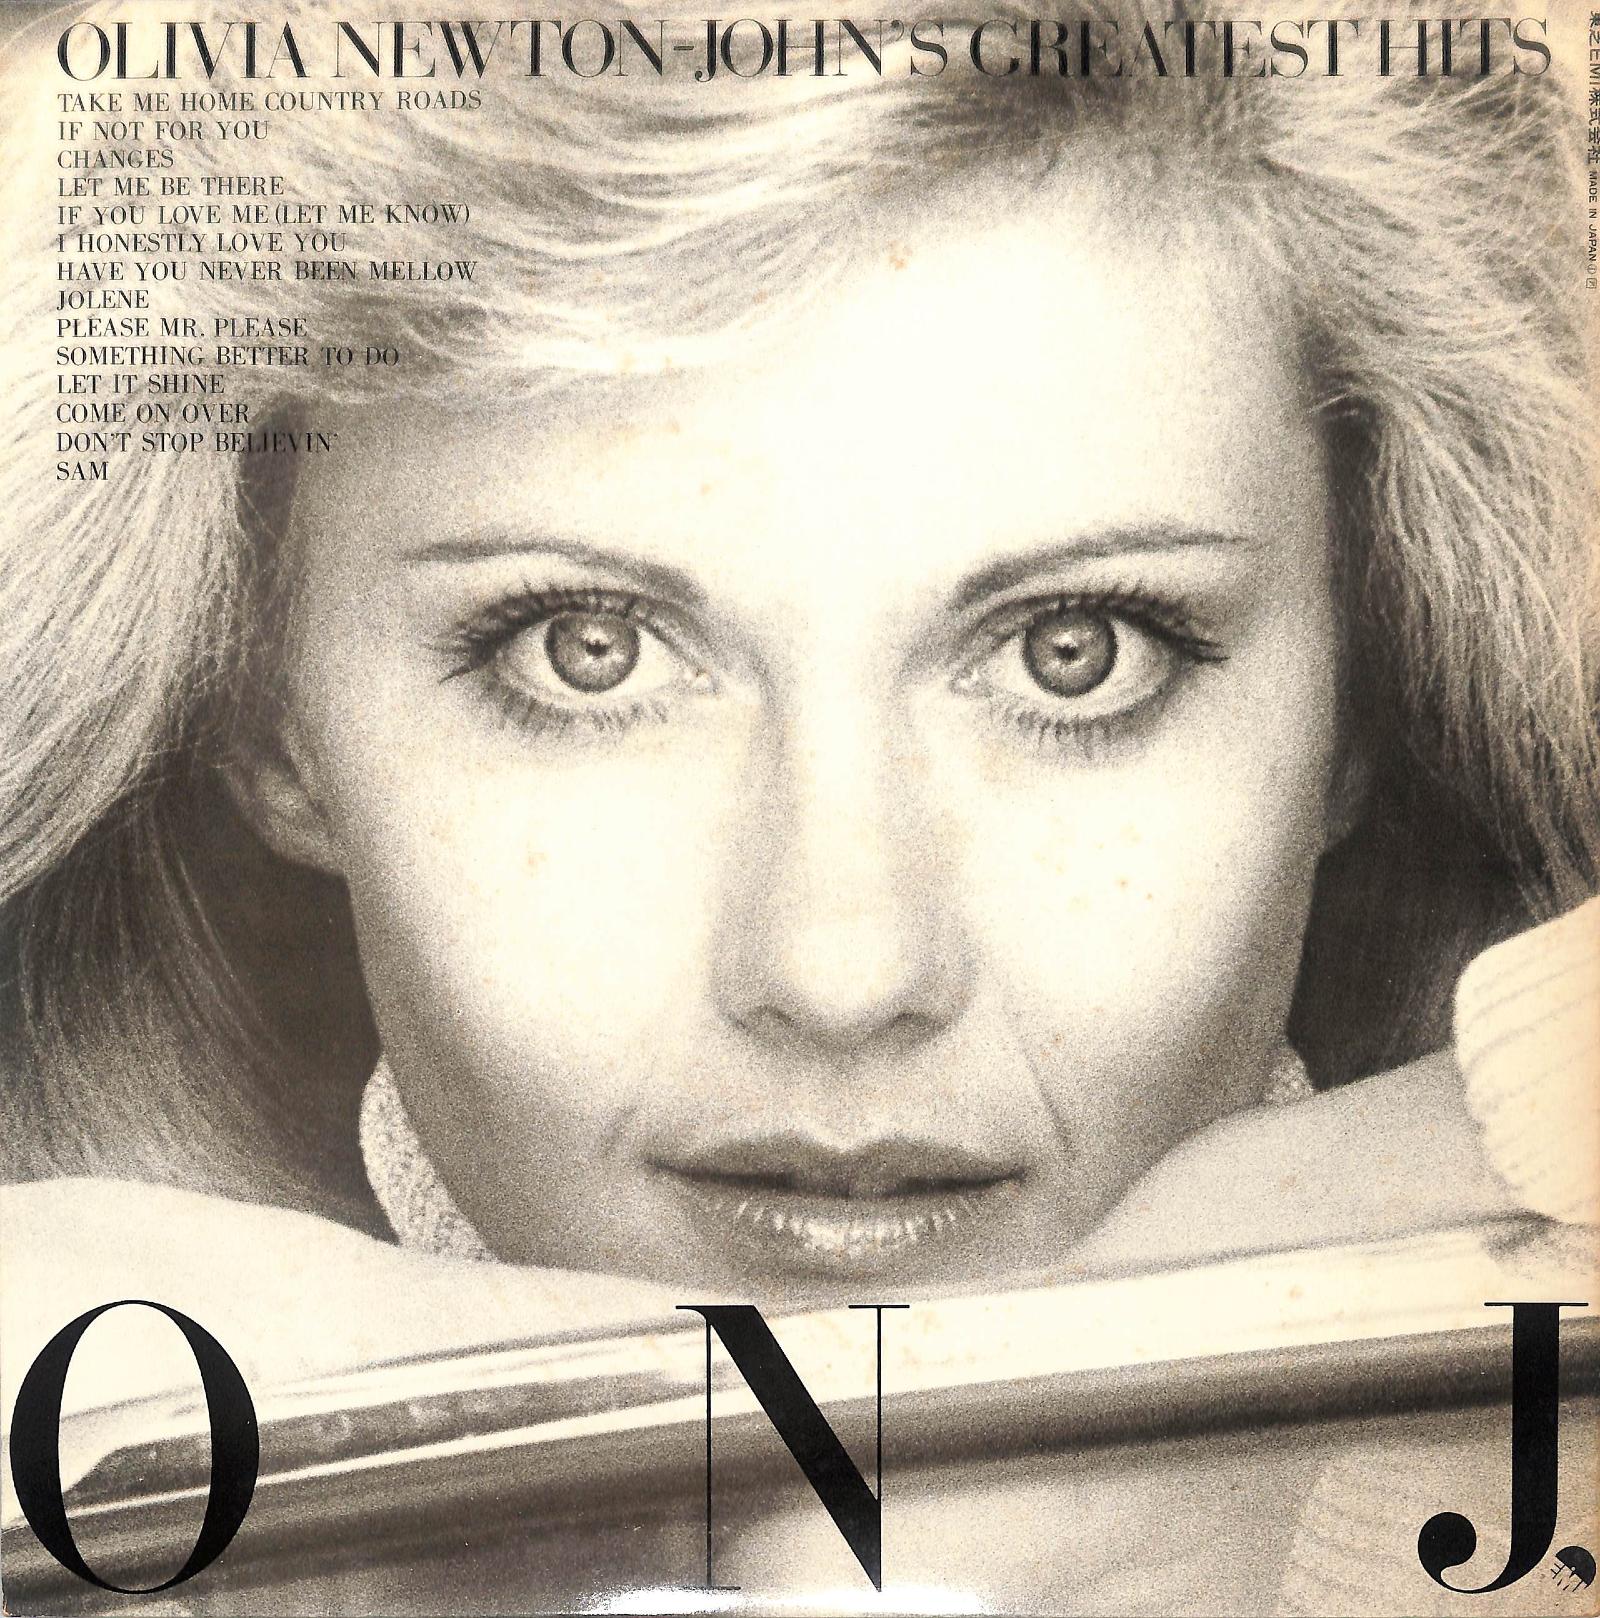 OLIVIA NEWTON JOHN - Olivia Newton-John's Greatest Hits